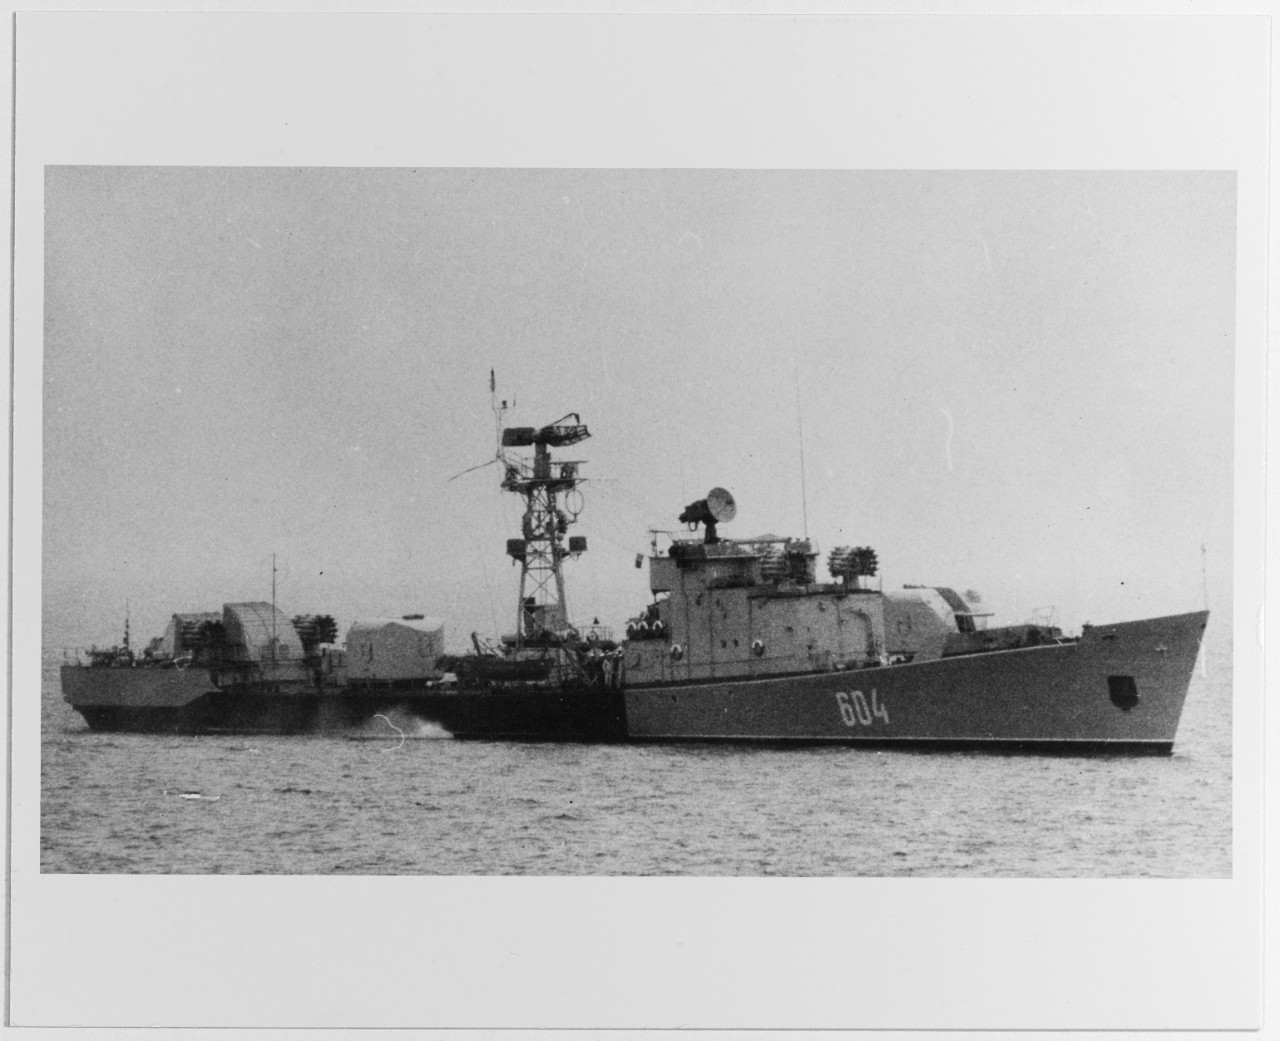 Mirka-class ocean escort